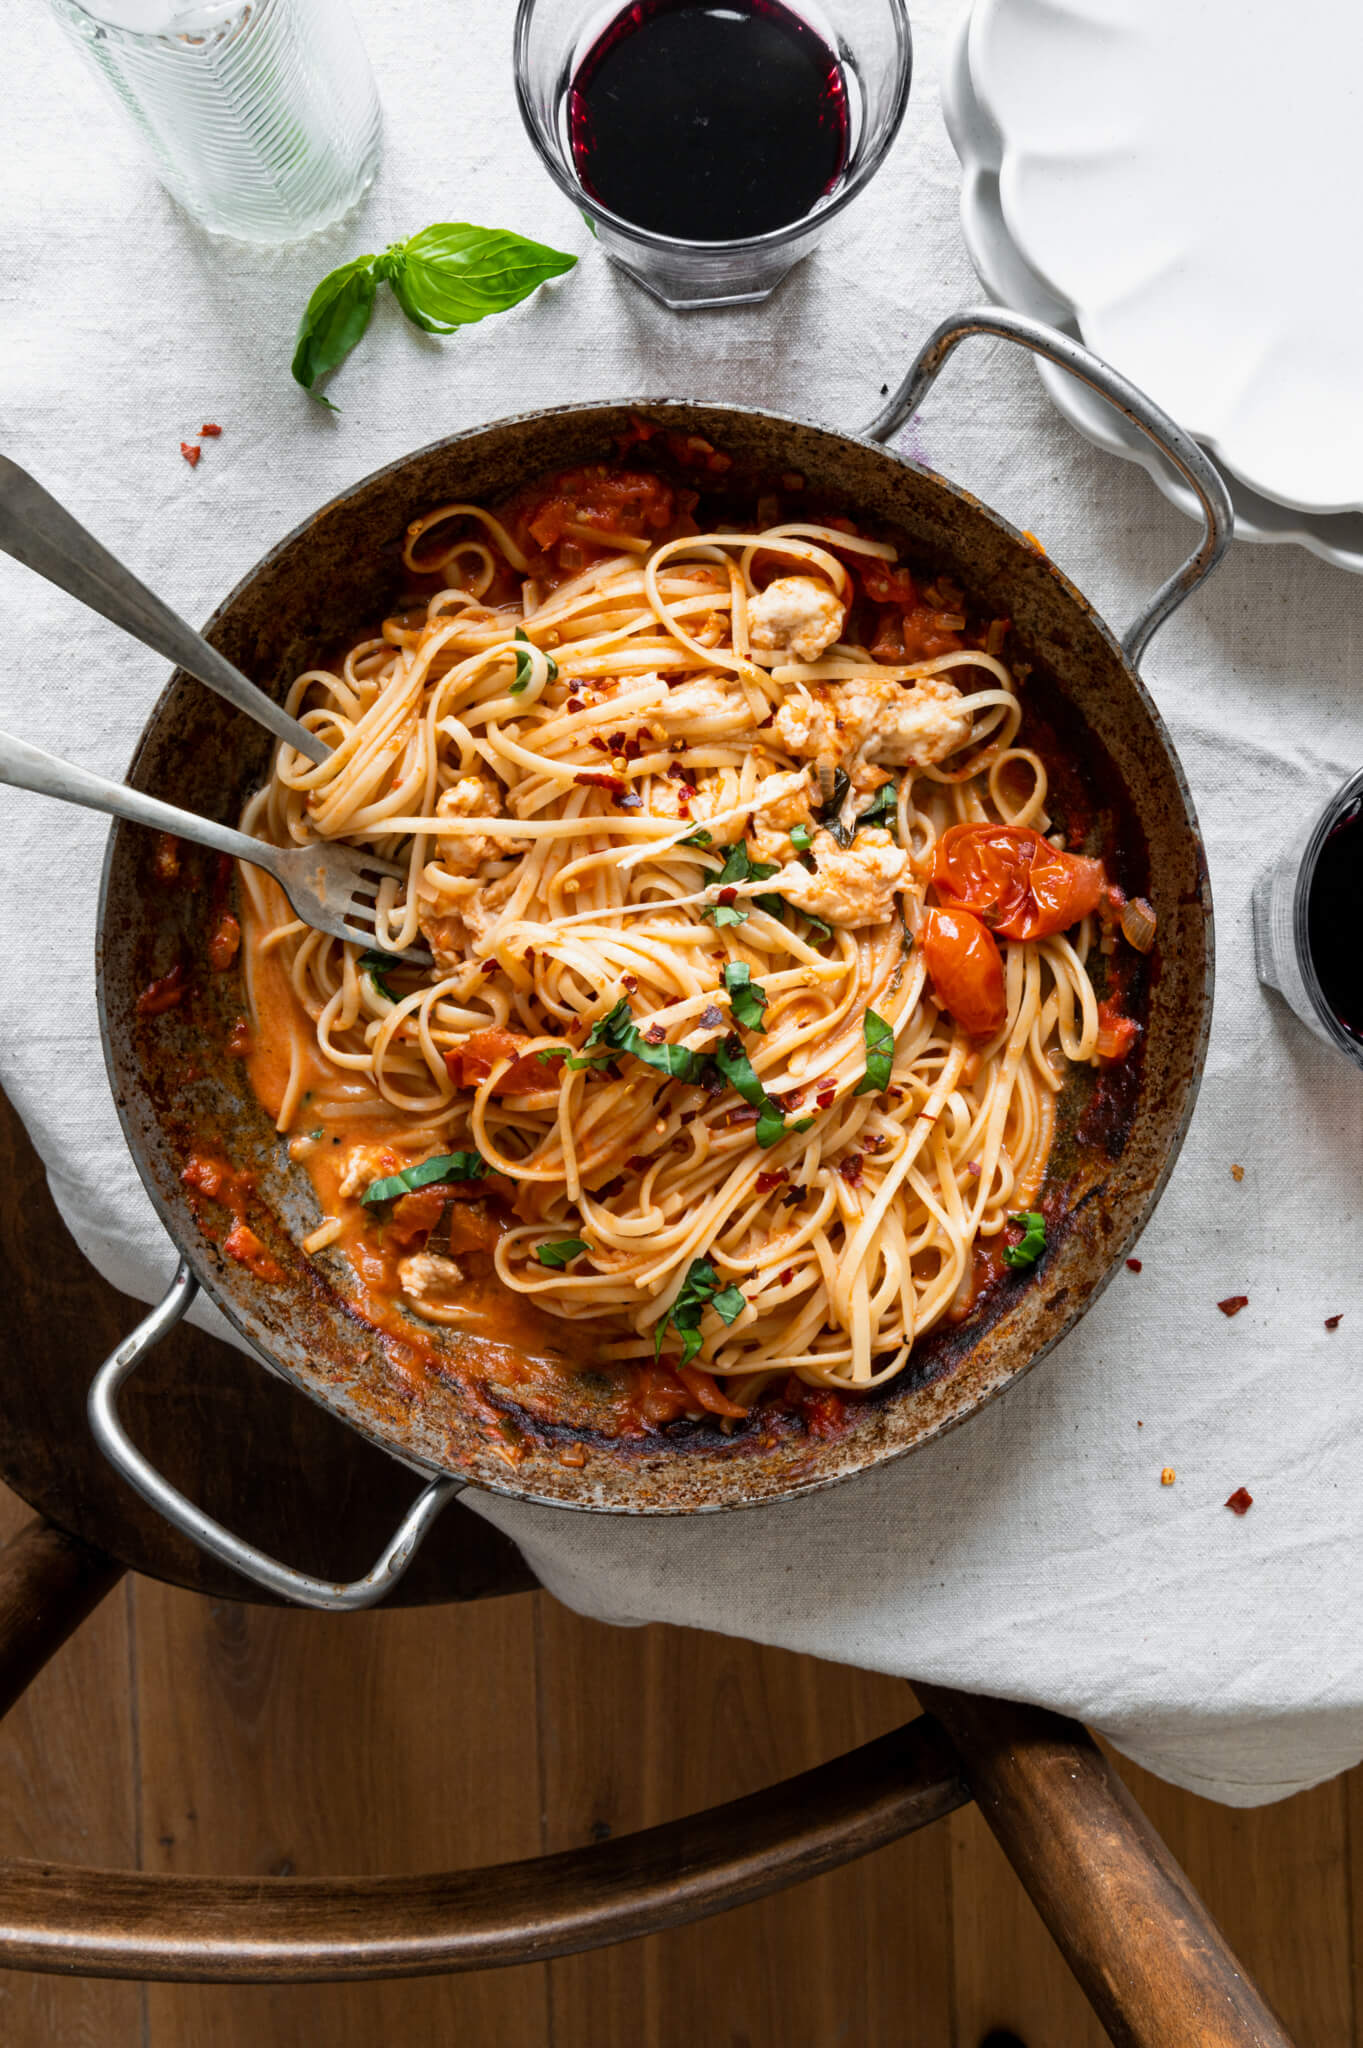 Mozzarella uit de oven met spaghetti